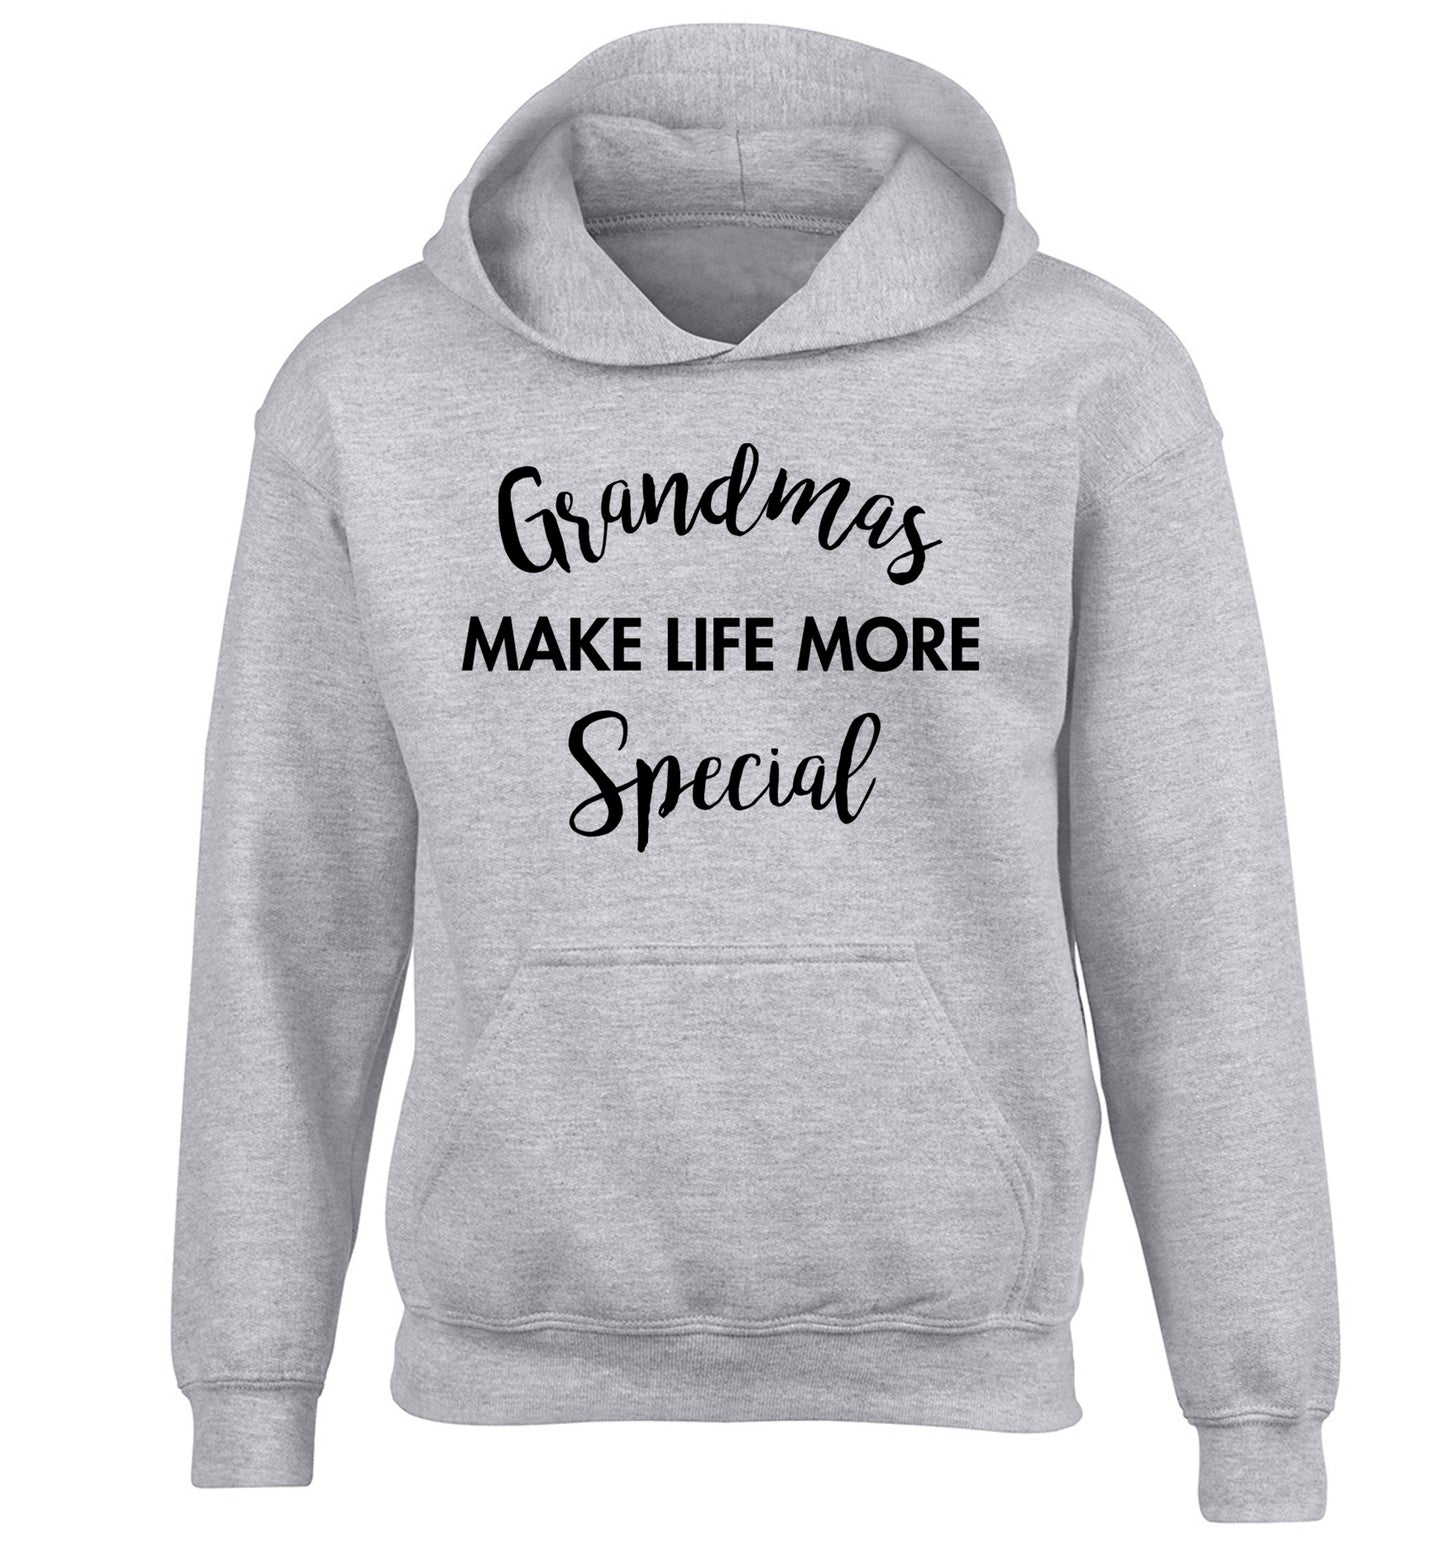 Grandmas make life more special children's grey hoodie 12-14 Years